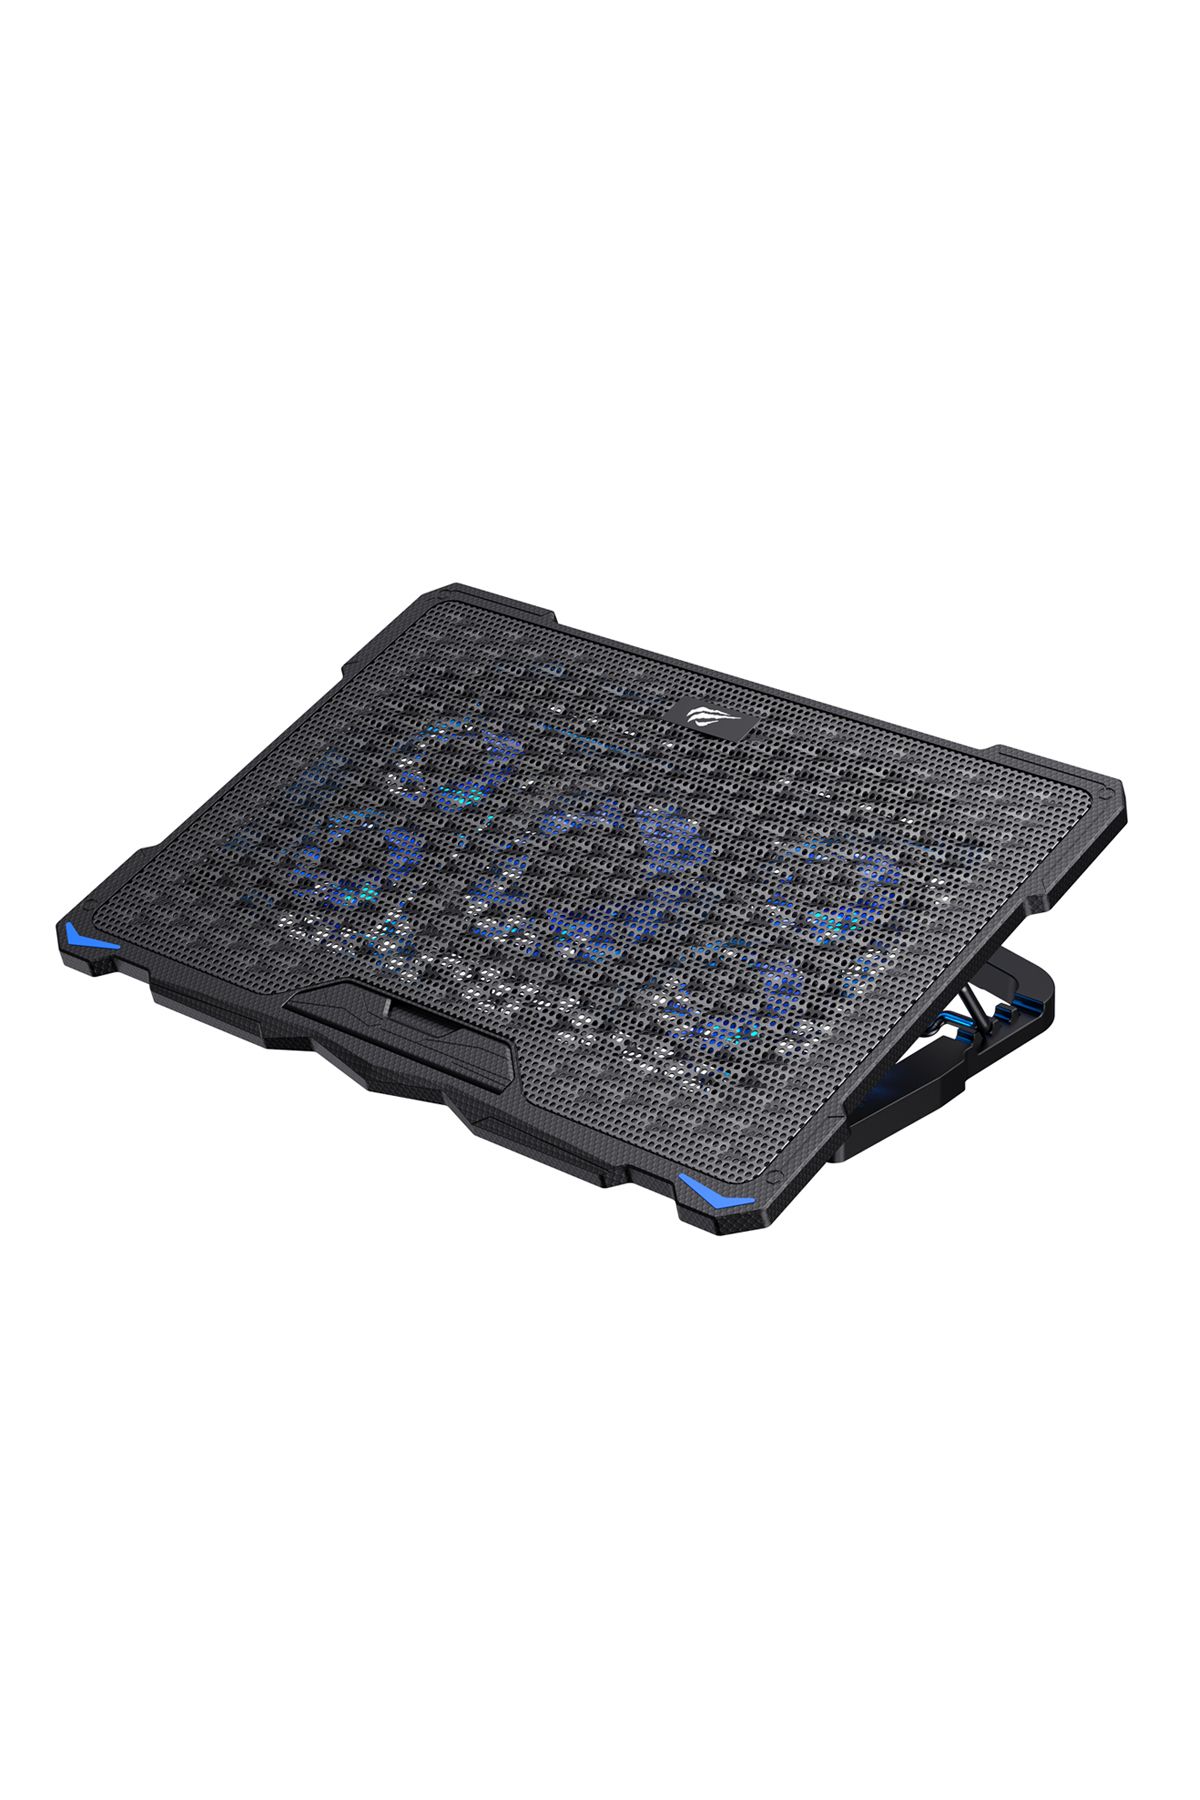 Havit Gamenote F2076 Cooling Pad Aydınlatmalı Gaming Laptop Soğutucu - Ayarlanabilir - 2400RPM - 17"